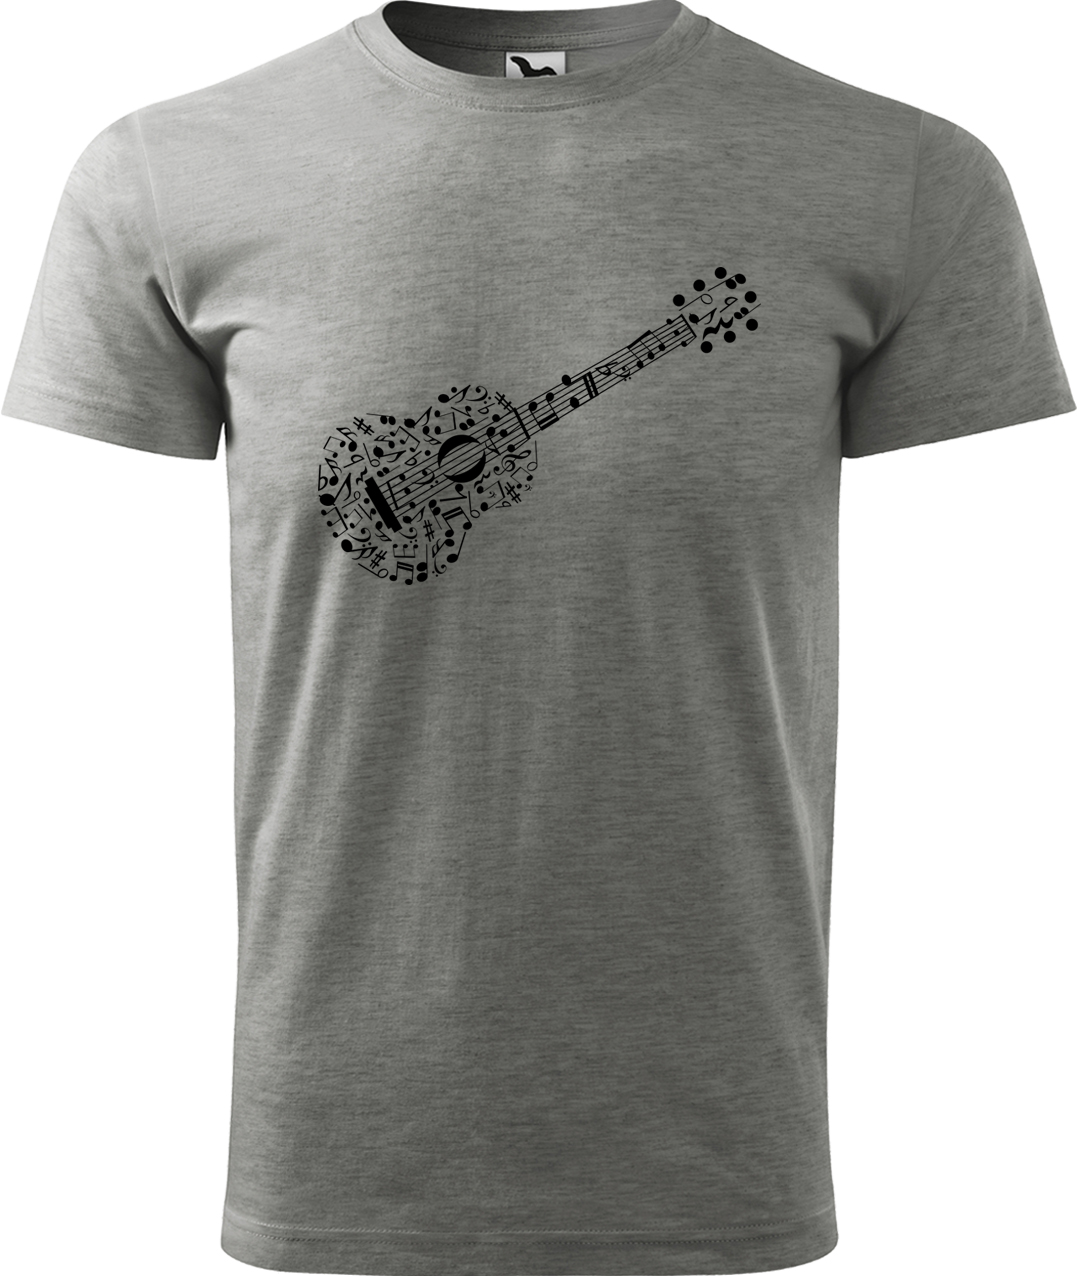 Pánské tričko s kytarou - Kytara z not Velikost: M, Barva: Tmavě šedý melír (12), Střih: pánský